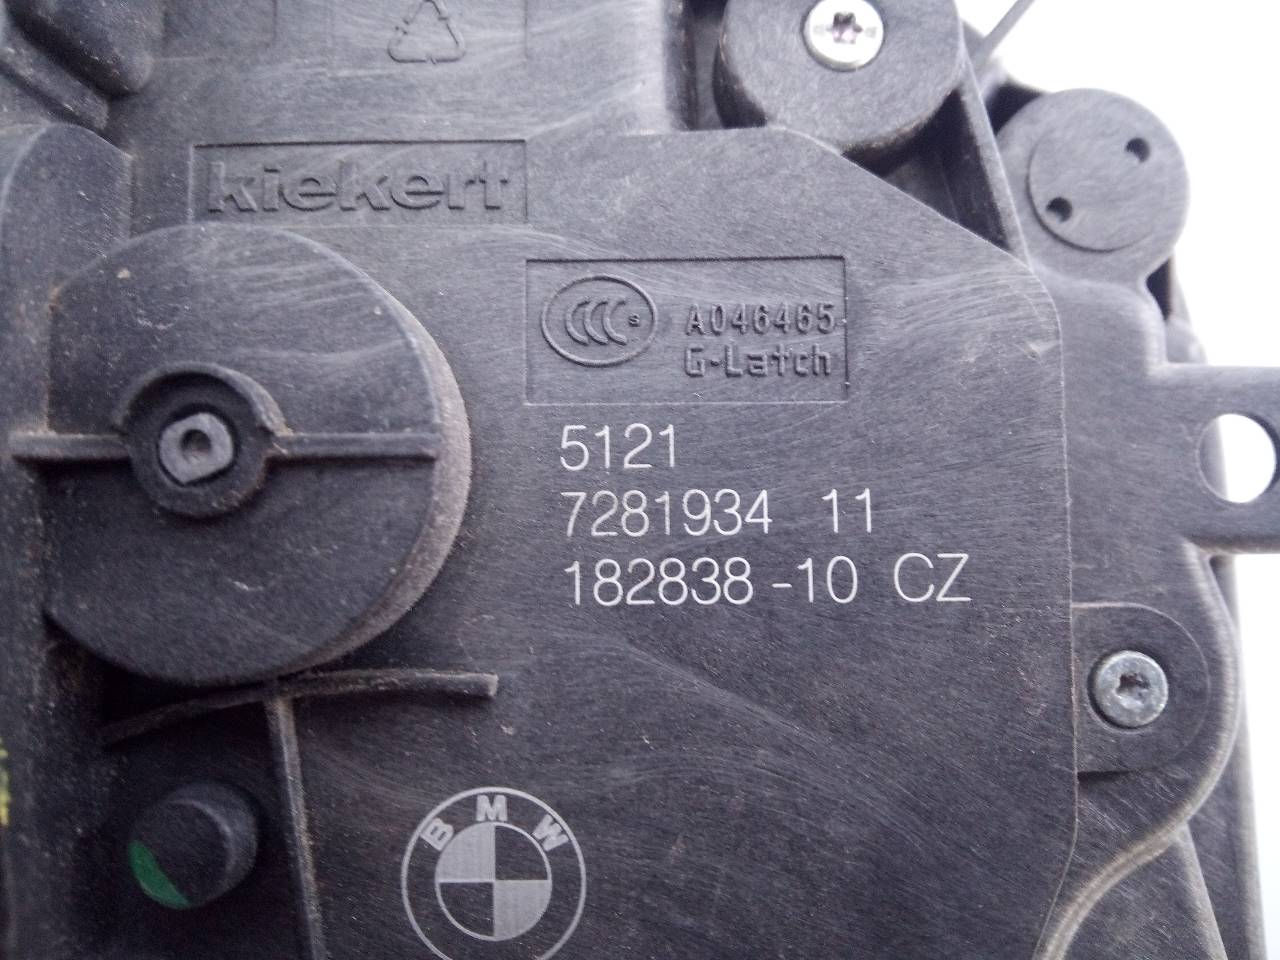 MINI Cooper R56 (2006-2015) Front Right Door Lock 728193411, 18283810CZ, E1-B4-47-2 21817201